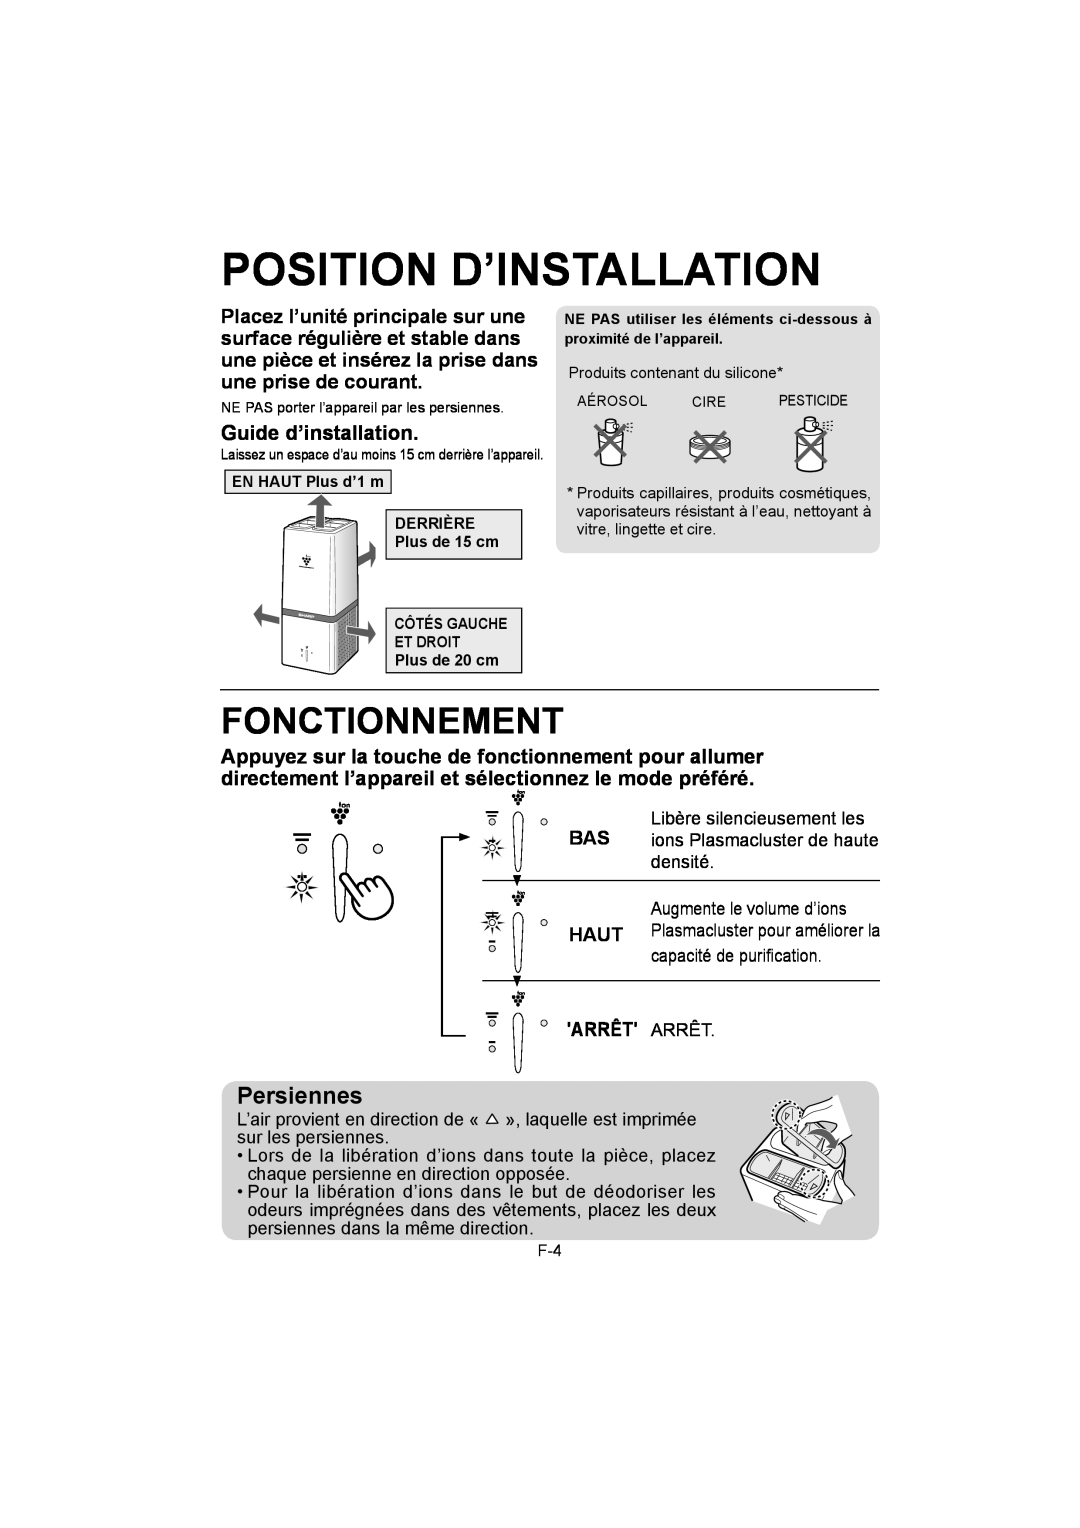 Sharp IG-A10E operation manual Position D’Installation, Fonctionnement, Persiennes 